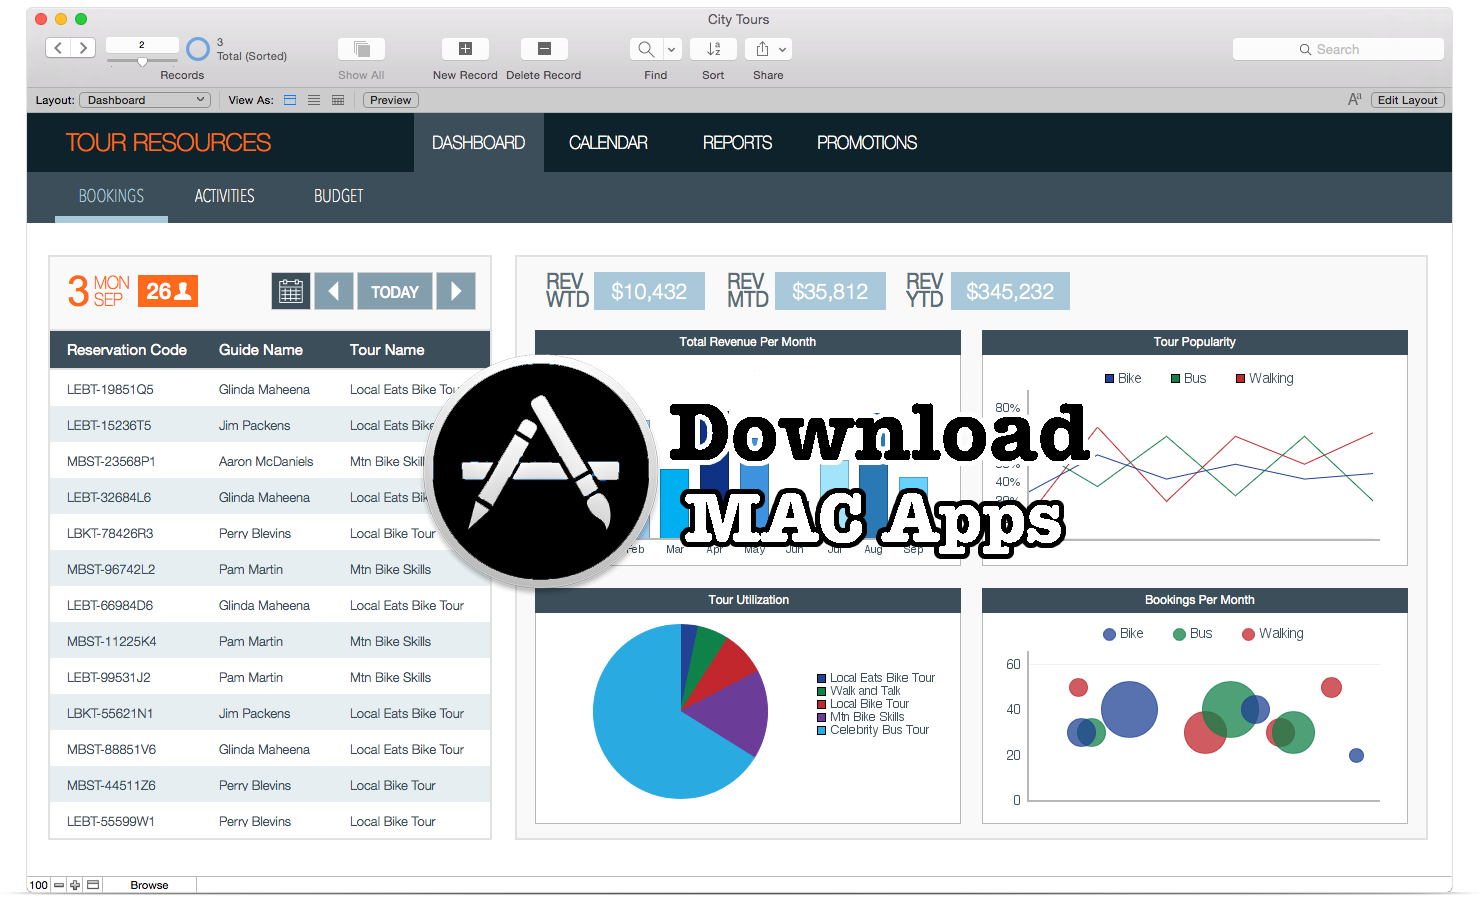 app mac filemaker pro 16 advanced nulled